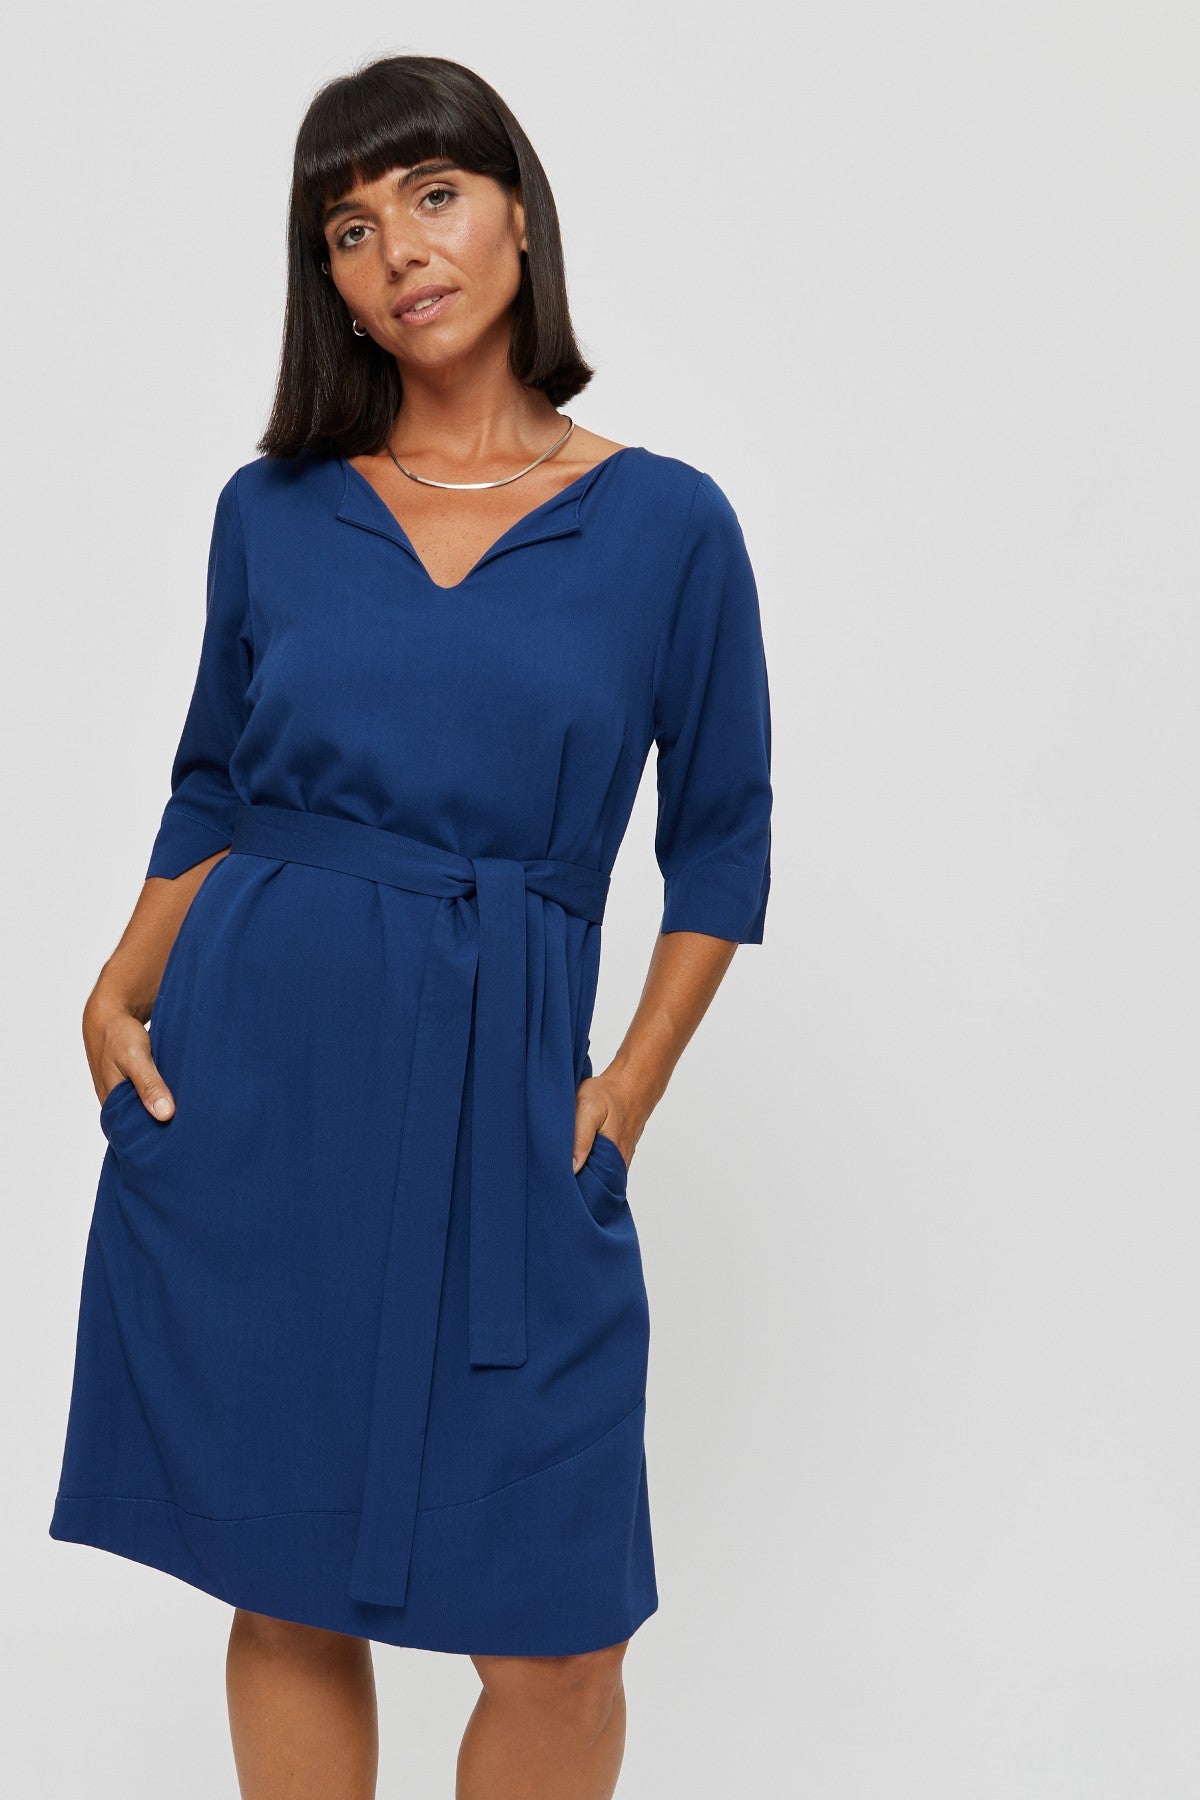 Damen Business Kleid CATHERINE in Blau